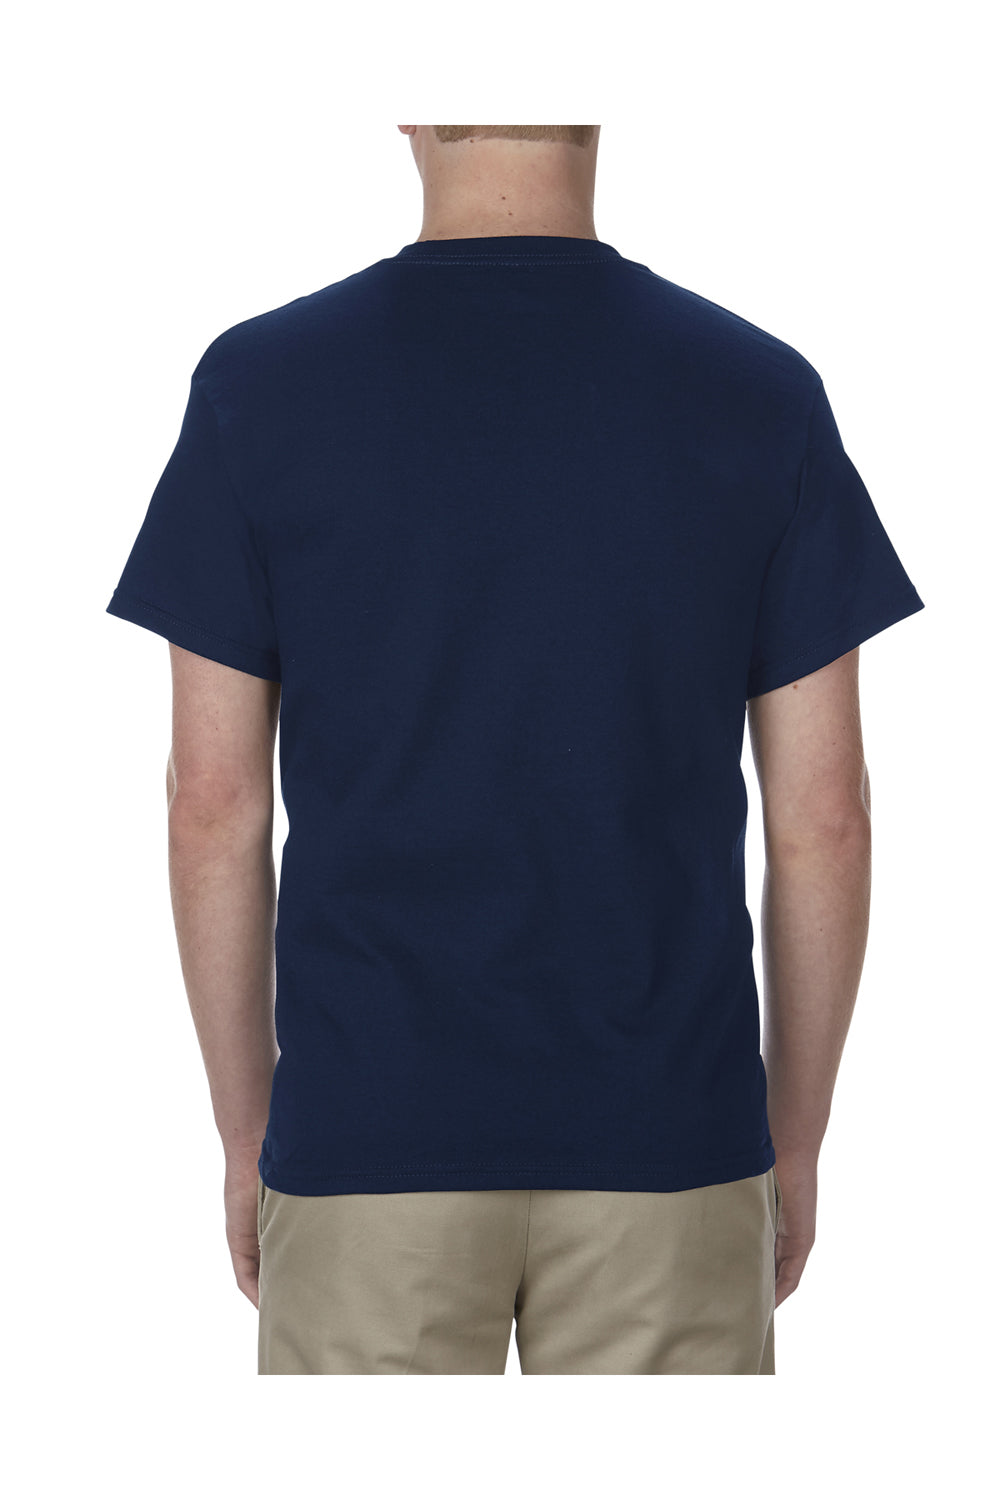 Alstyle AL1901 Mens Short Sleeve Crewneck T-Shirt Navy Blue Back